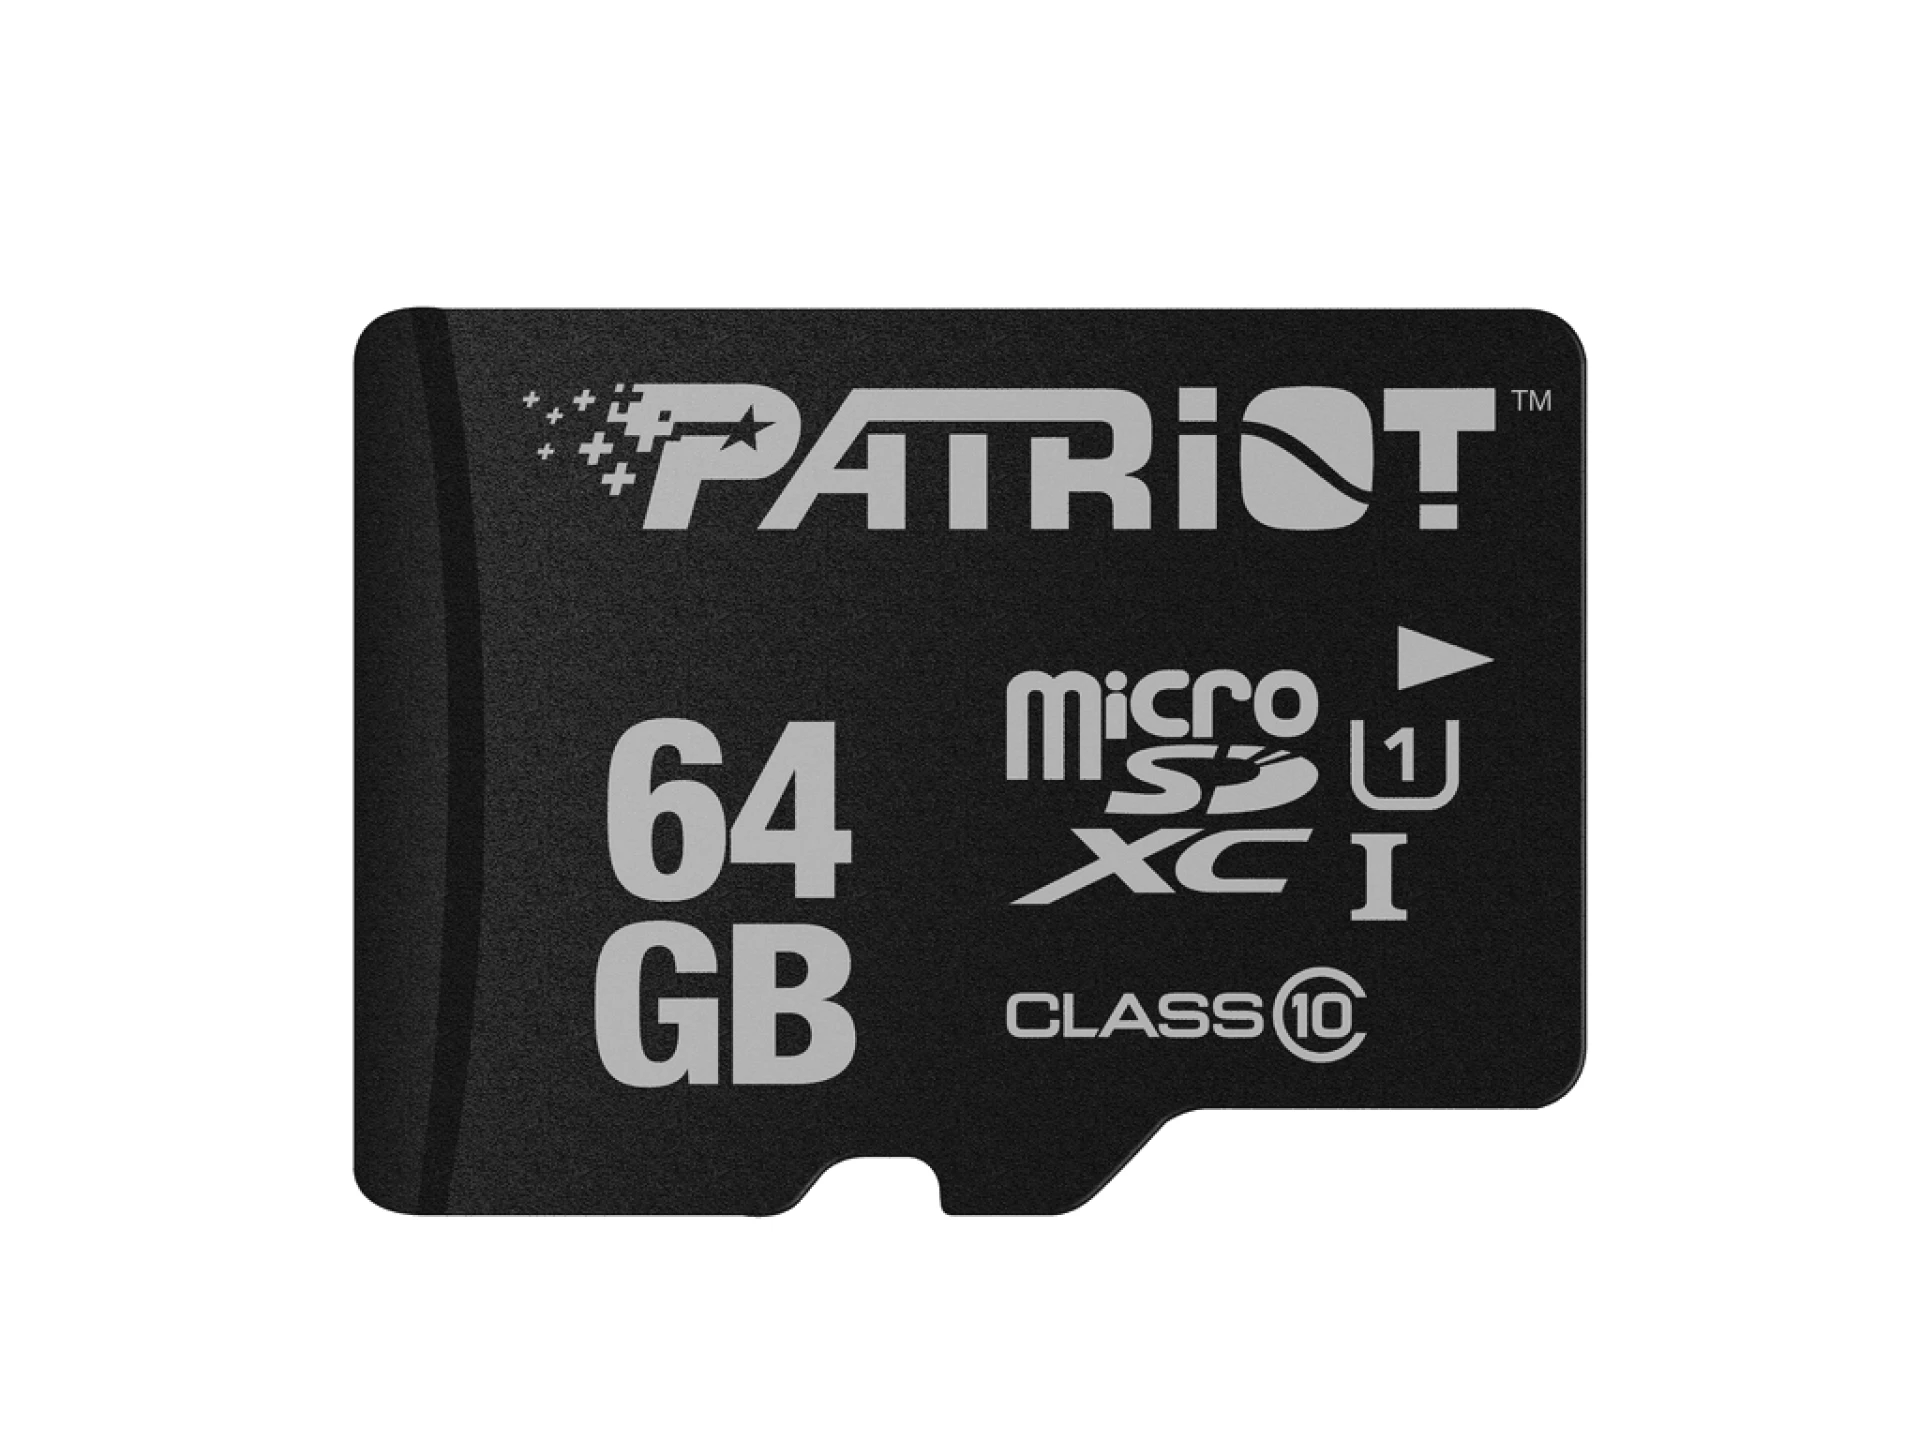 Patriot microSD 64GB